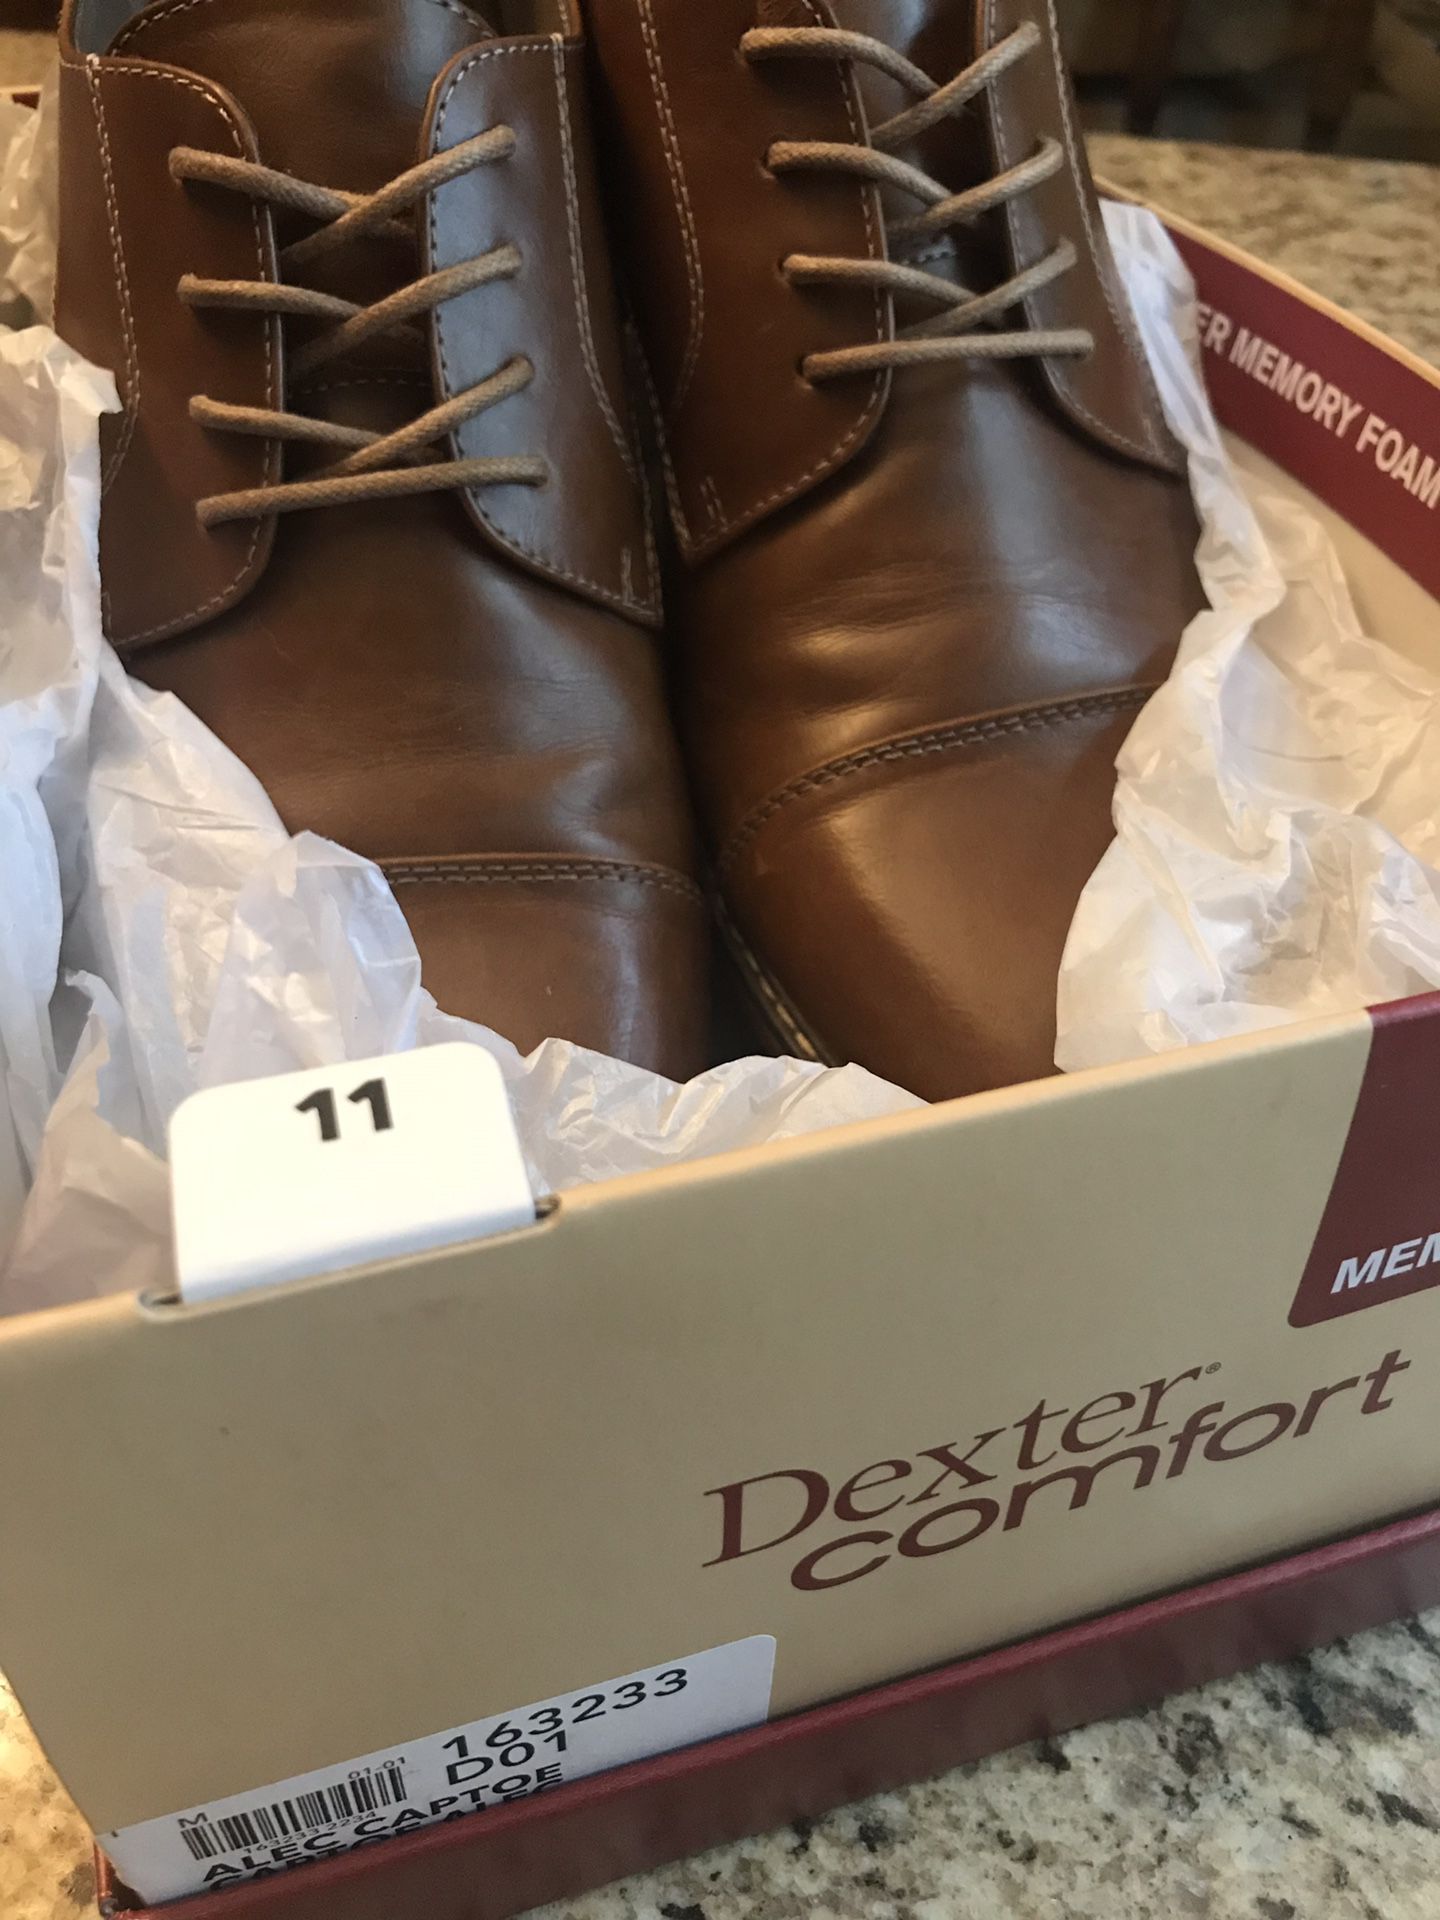 Alec Oxford shoes by Dexter